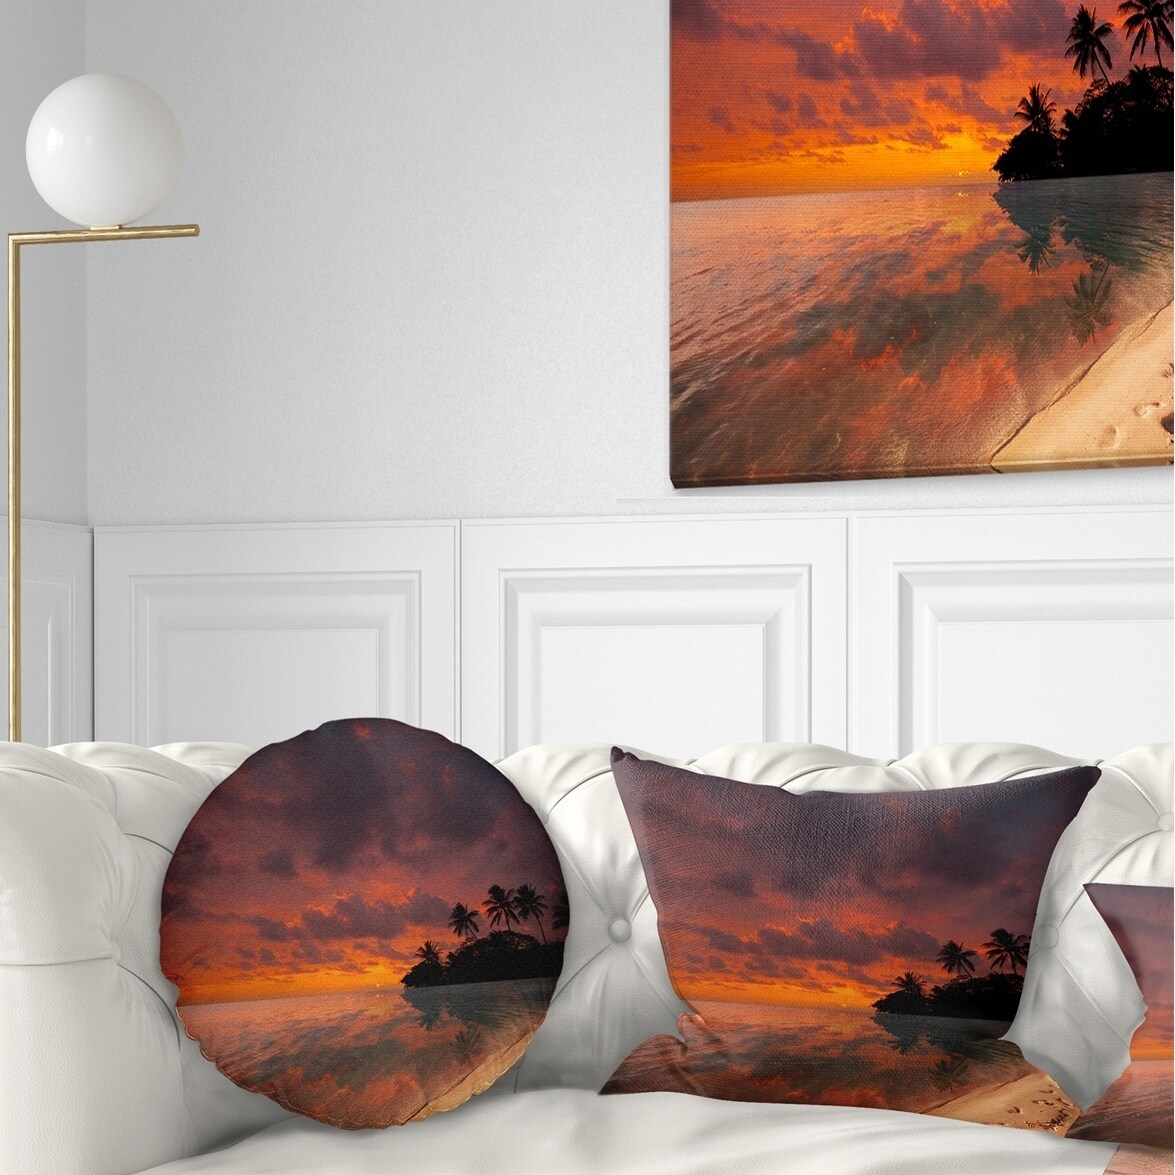 https://ak1.ostkcdn.com/images/products/20949589/Designart-Beautiful-Sunset-At-Tropical-Beach-Seashore-Throw-Pillow-03238117-3576-45ee-9d68-40c8f43ec5fa.jpg